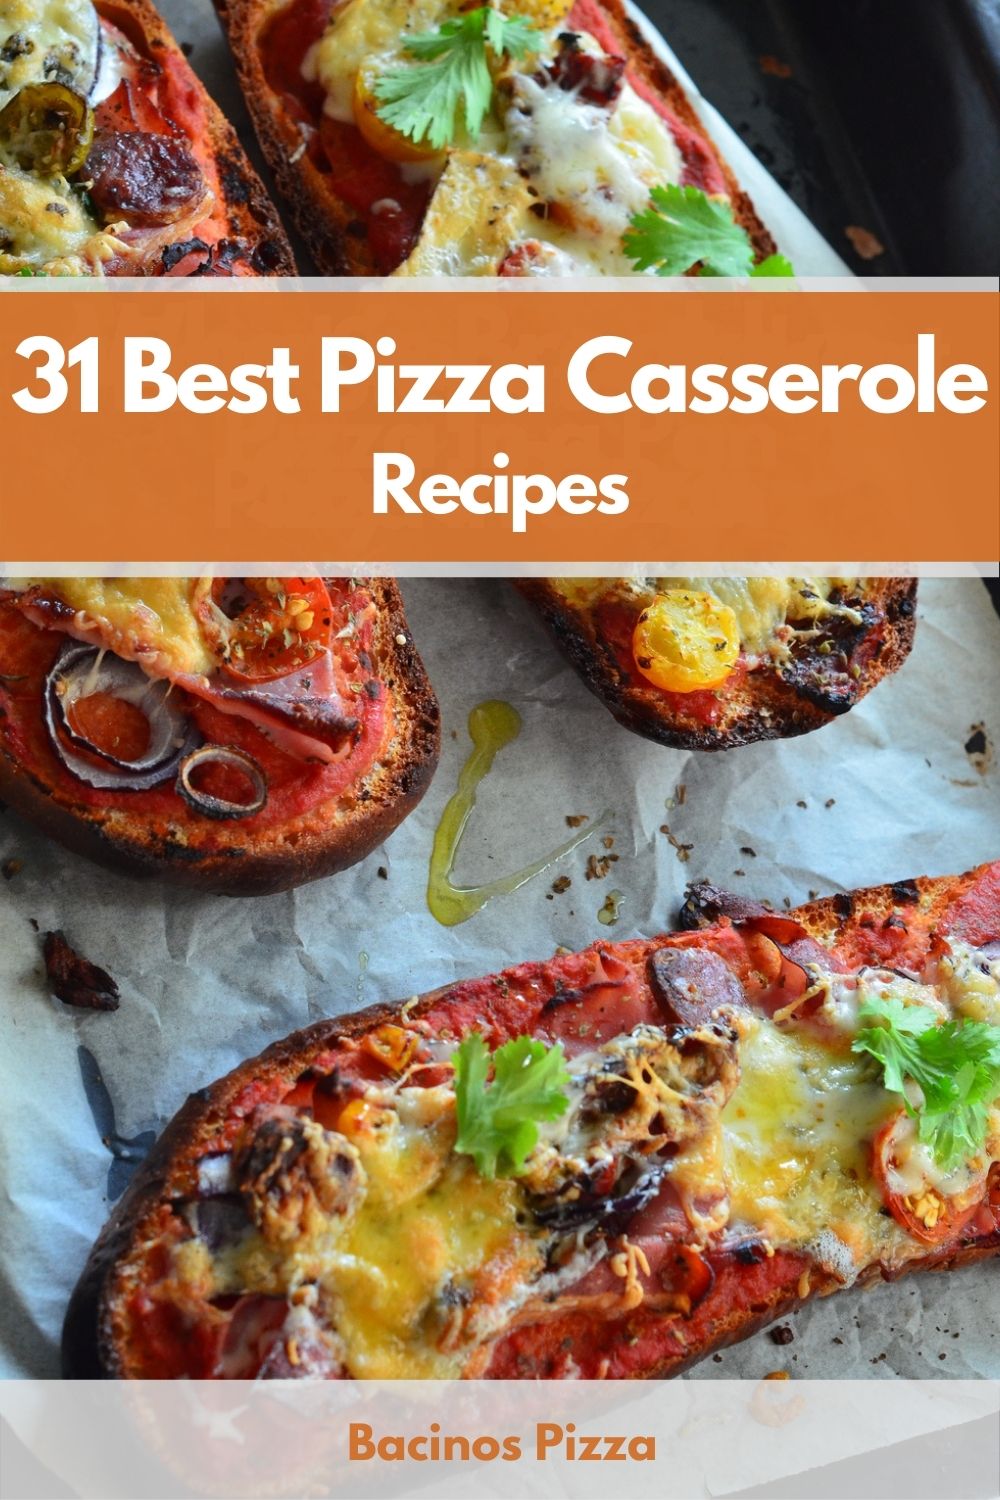 31 Best Pizza Casserole Recipes pin